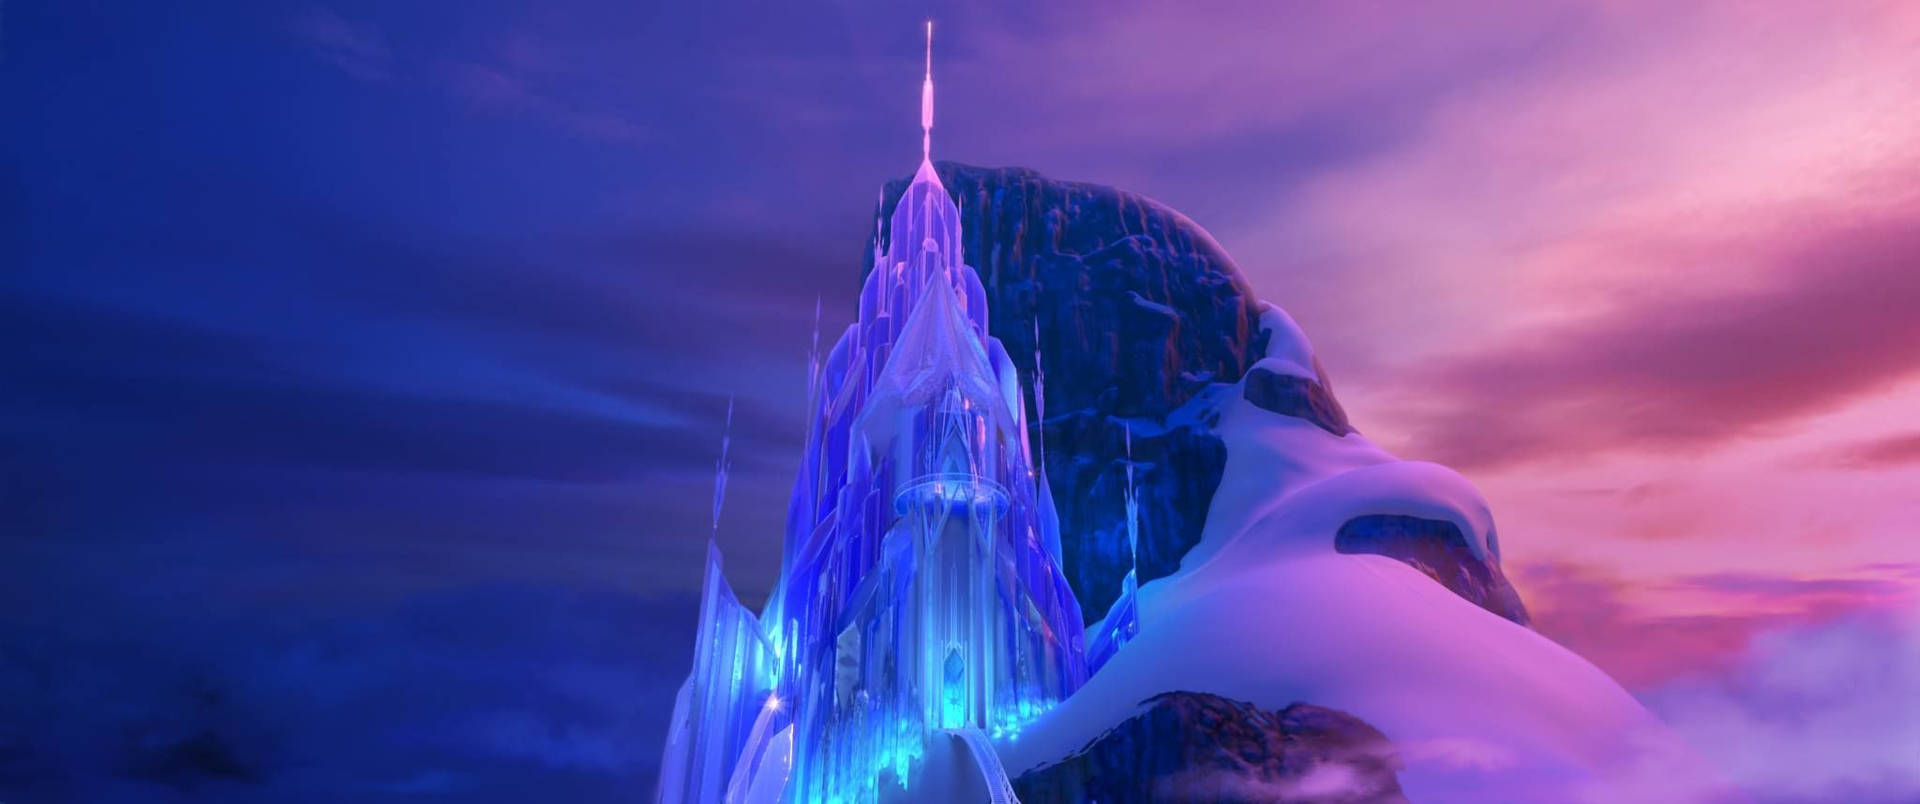 Frozen Castle On Cliff Background